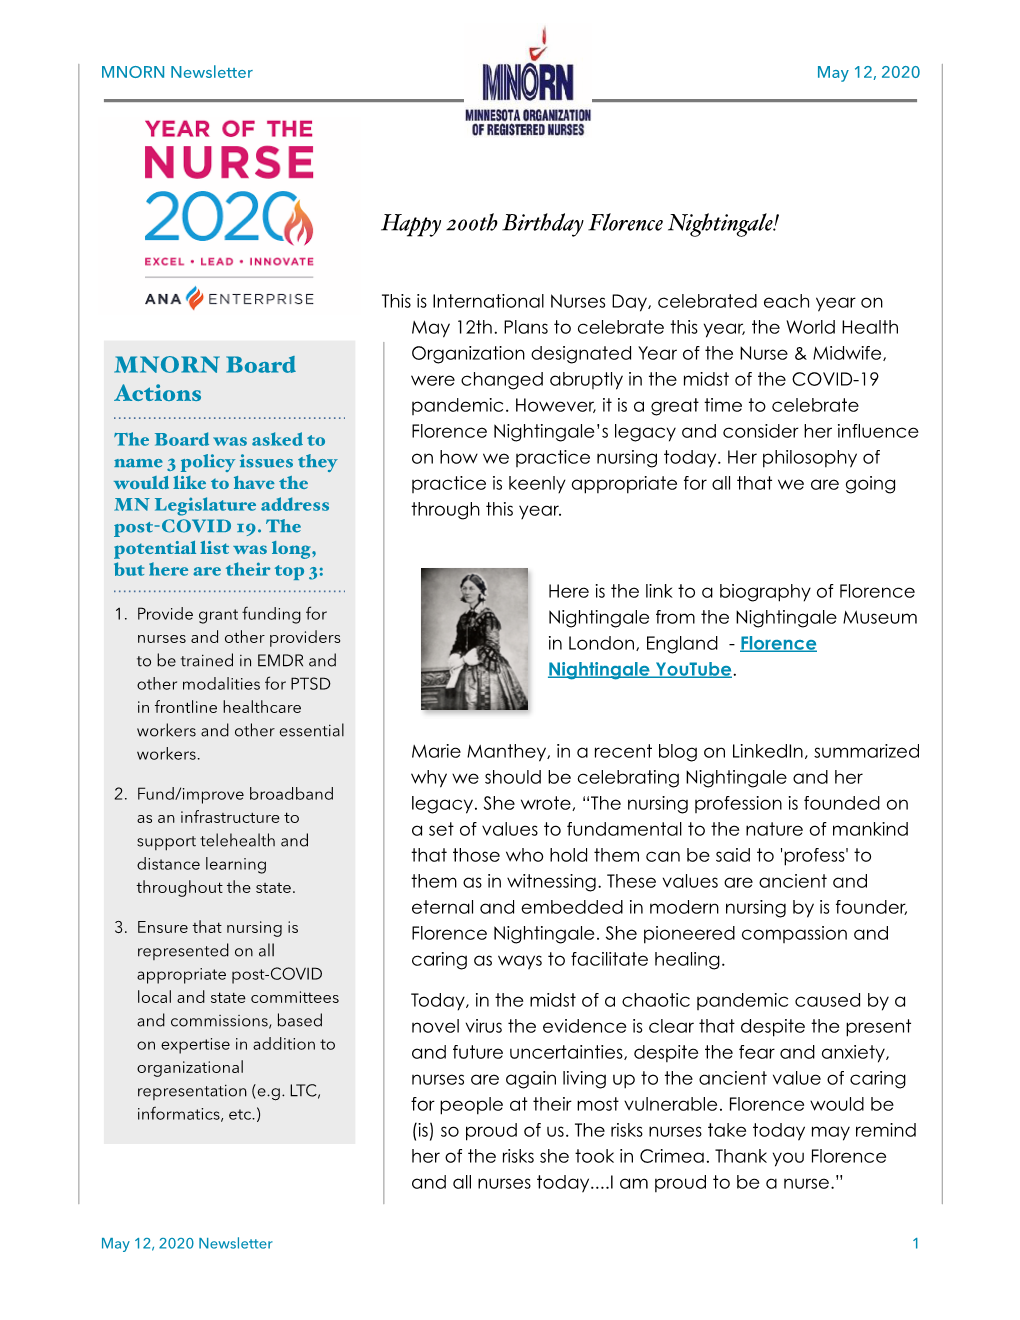 Happy 200Th Birthday Florence Nightingale!